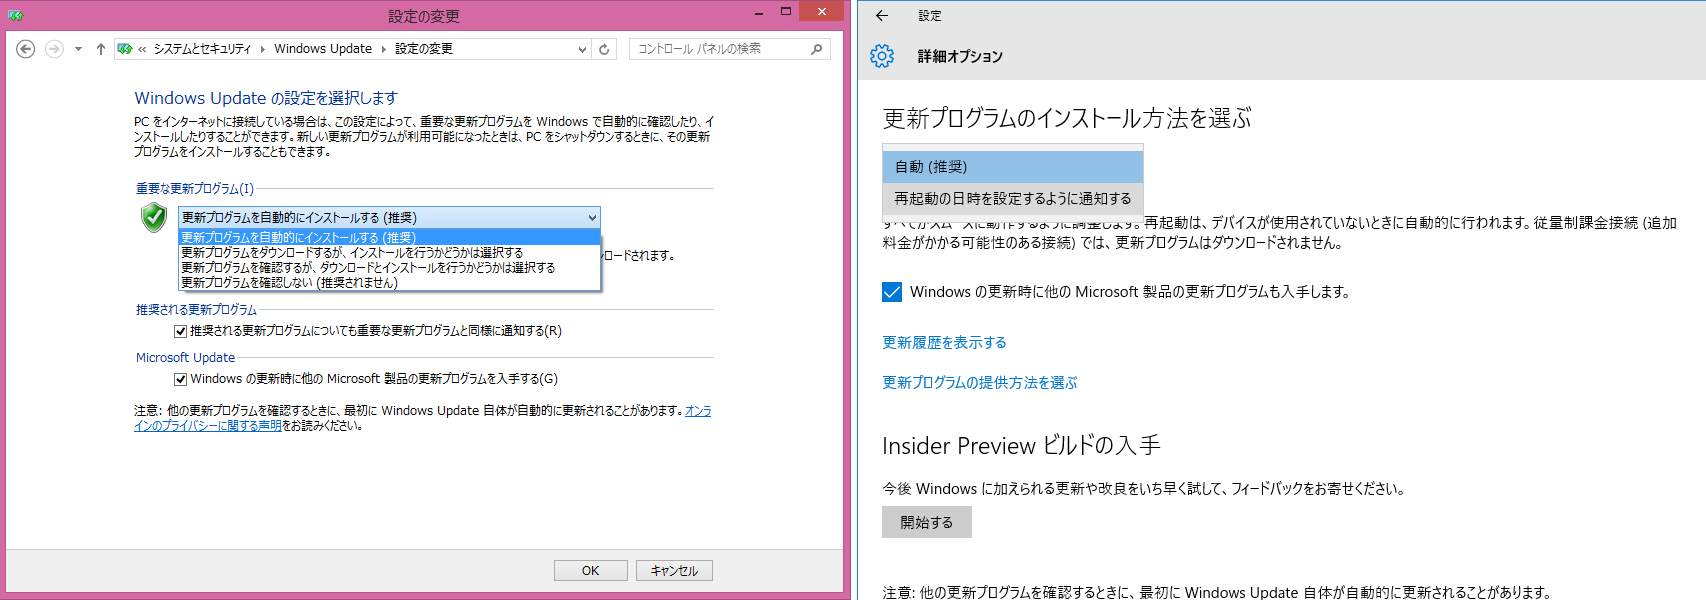 1@Windows 8.1ȑOWindows UpdateiʍjWindows 10Windows UpdateiʉEj̍XVIvV